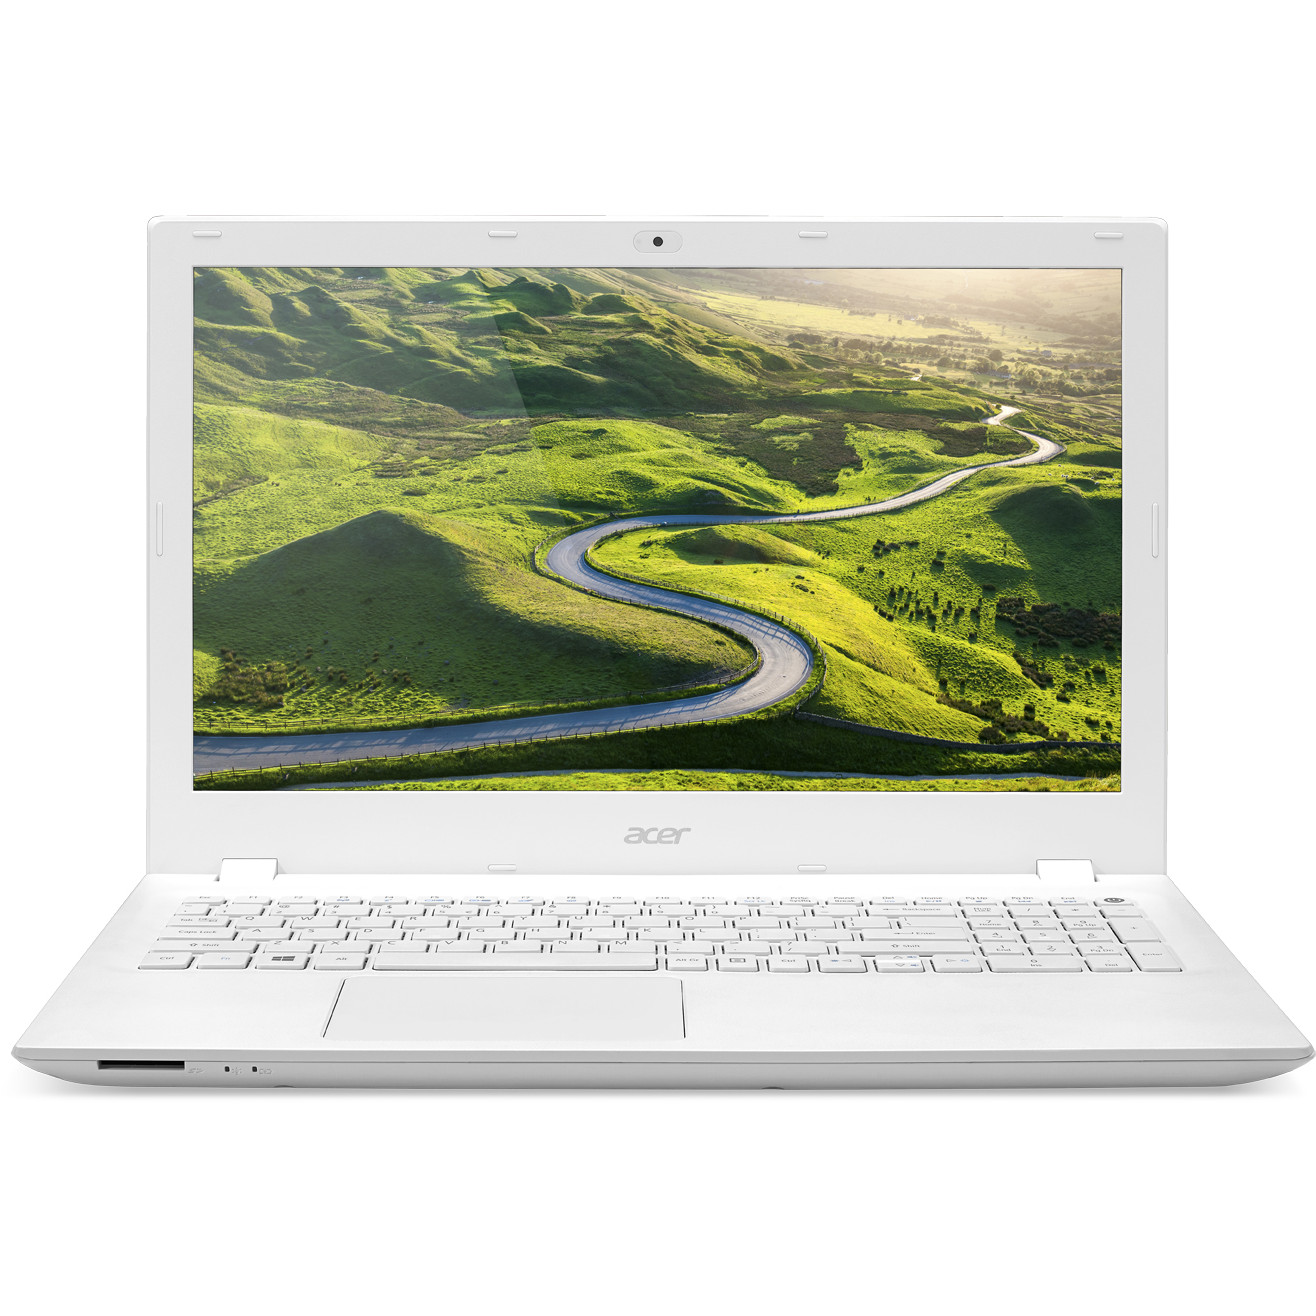  Laptop Acer E5-573-P3T1, Intel Pentium 3556U, 4GB DDR3, SSD 128GB, Intel HD Graphics, Linux 